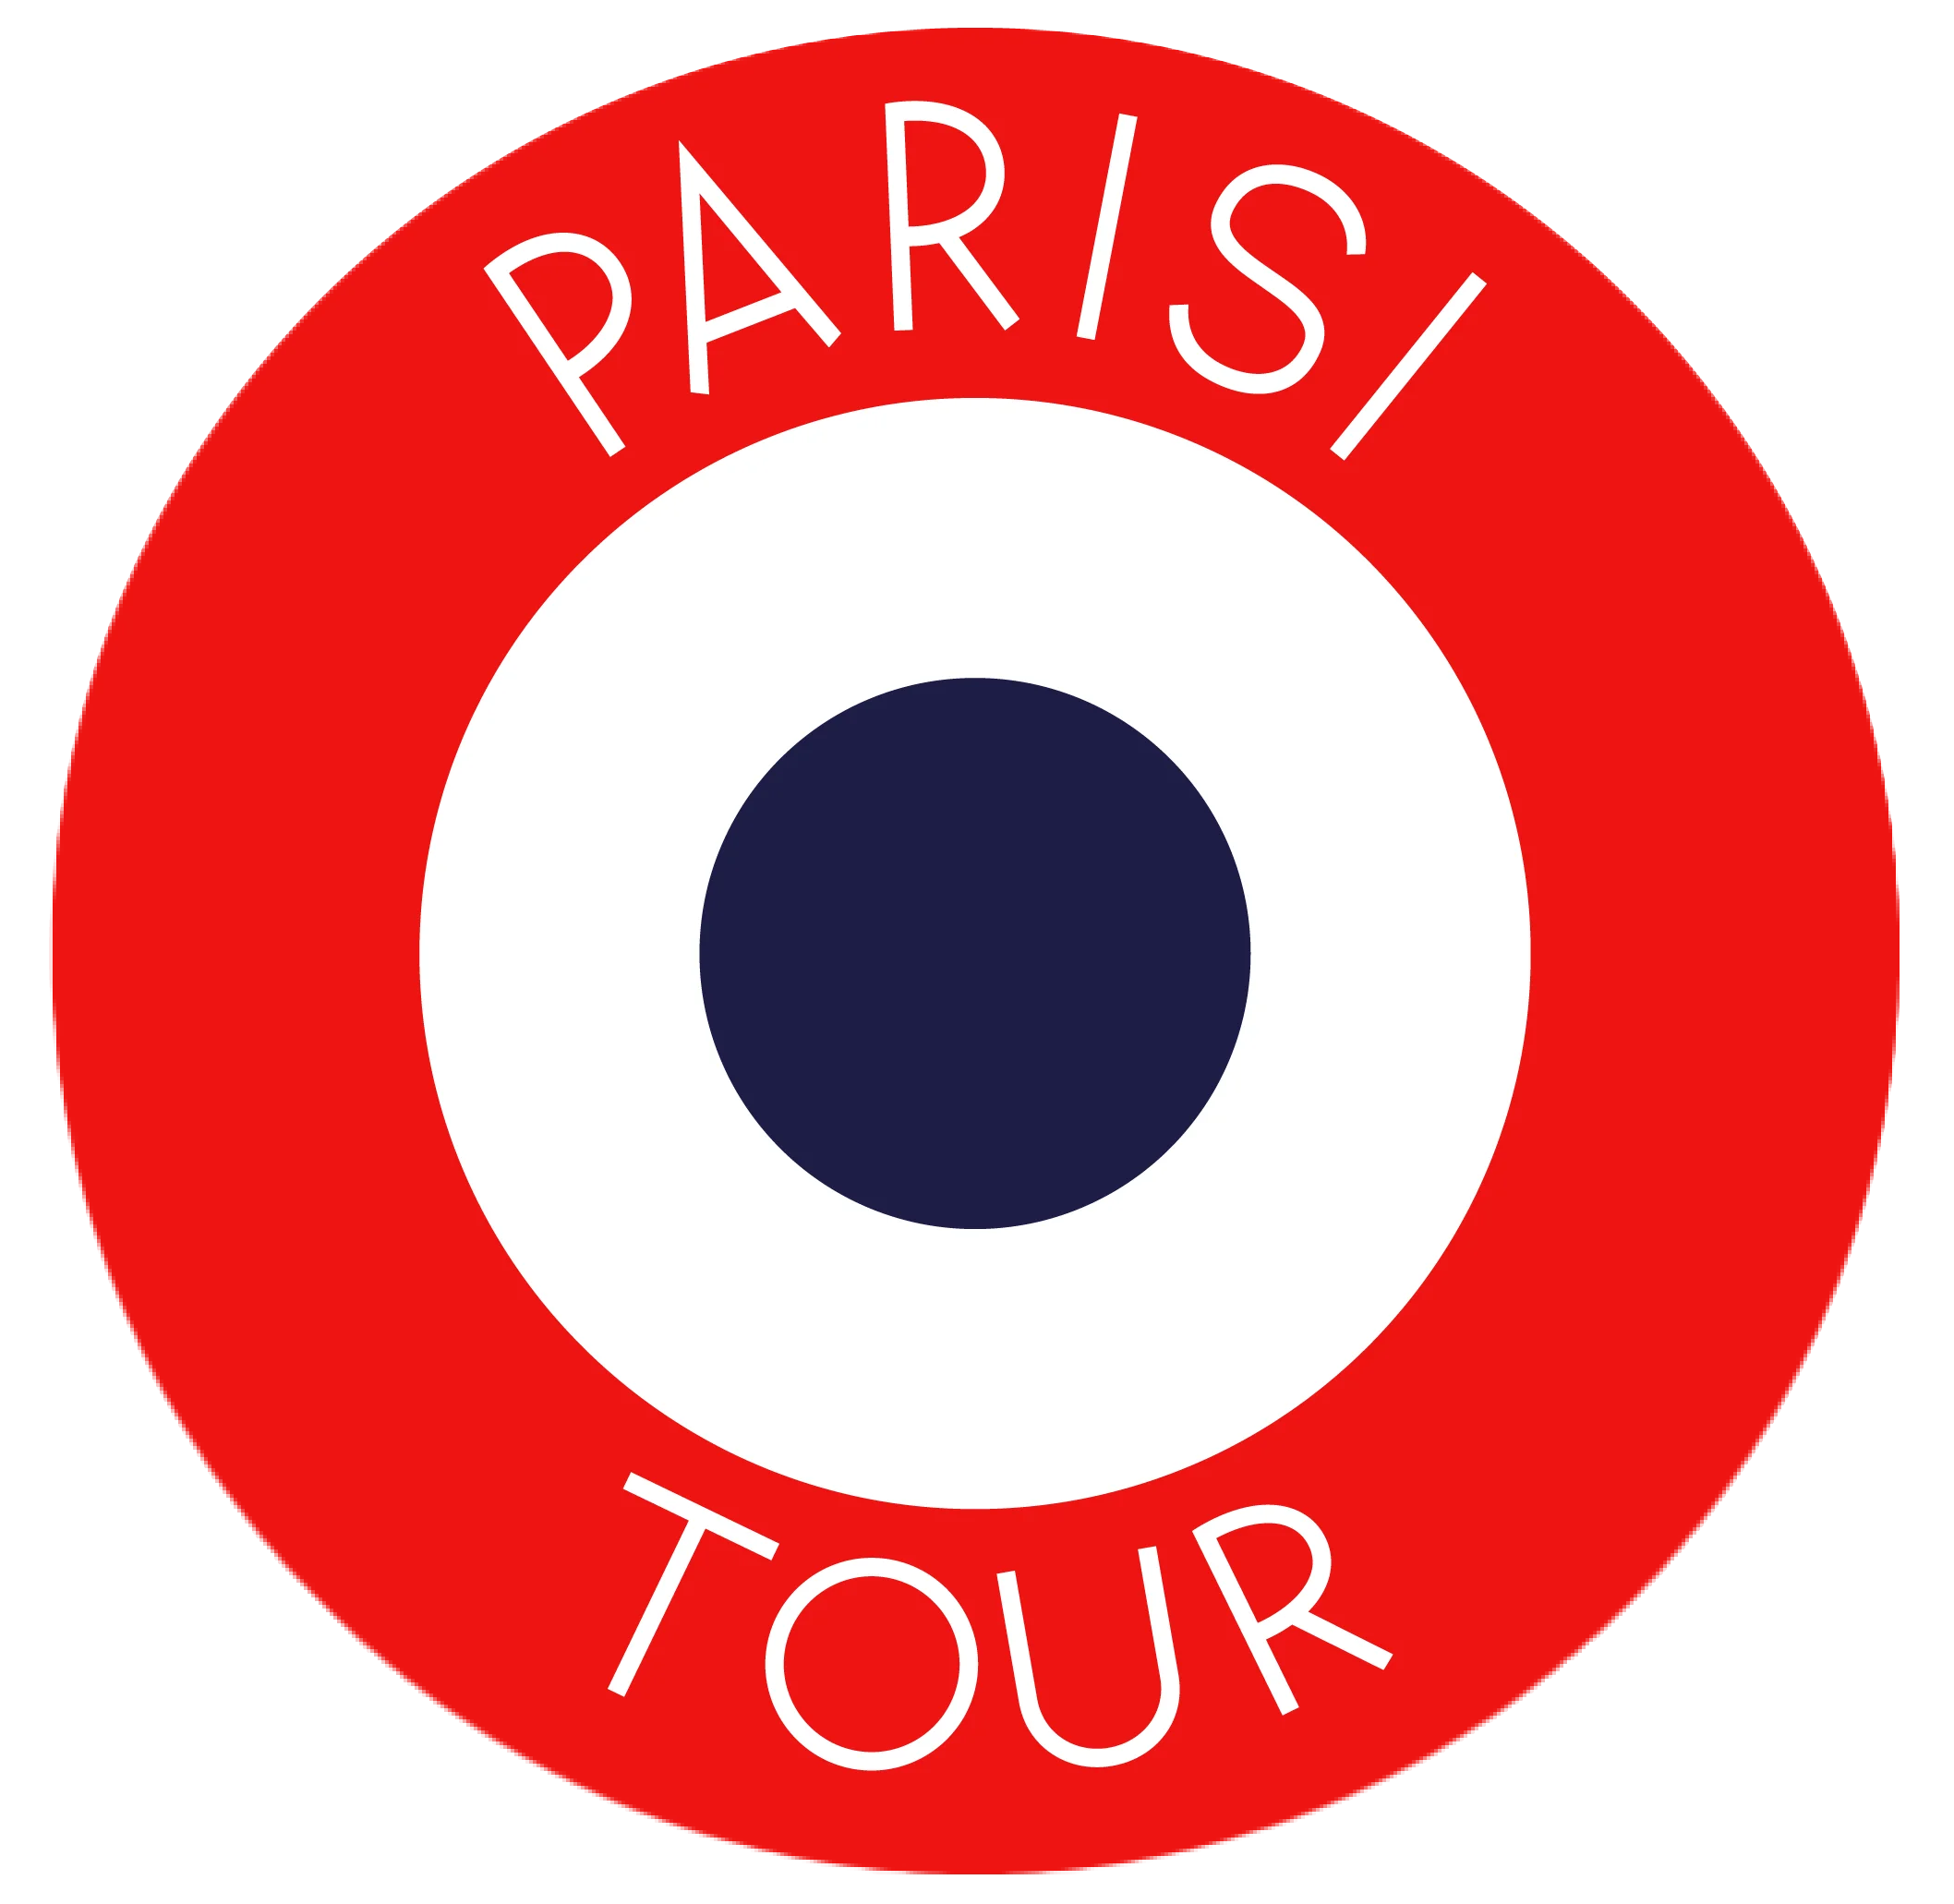 Parisi Tour Logo